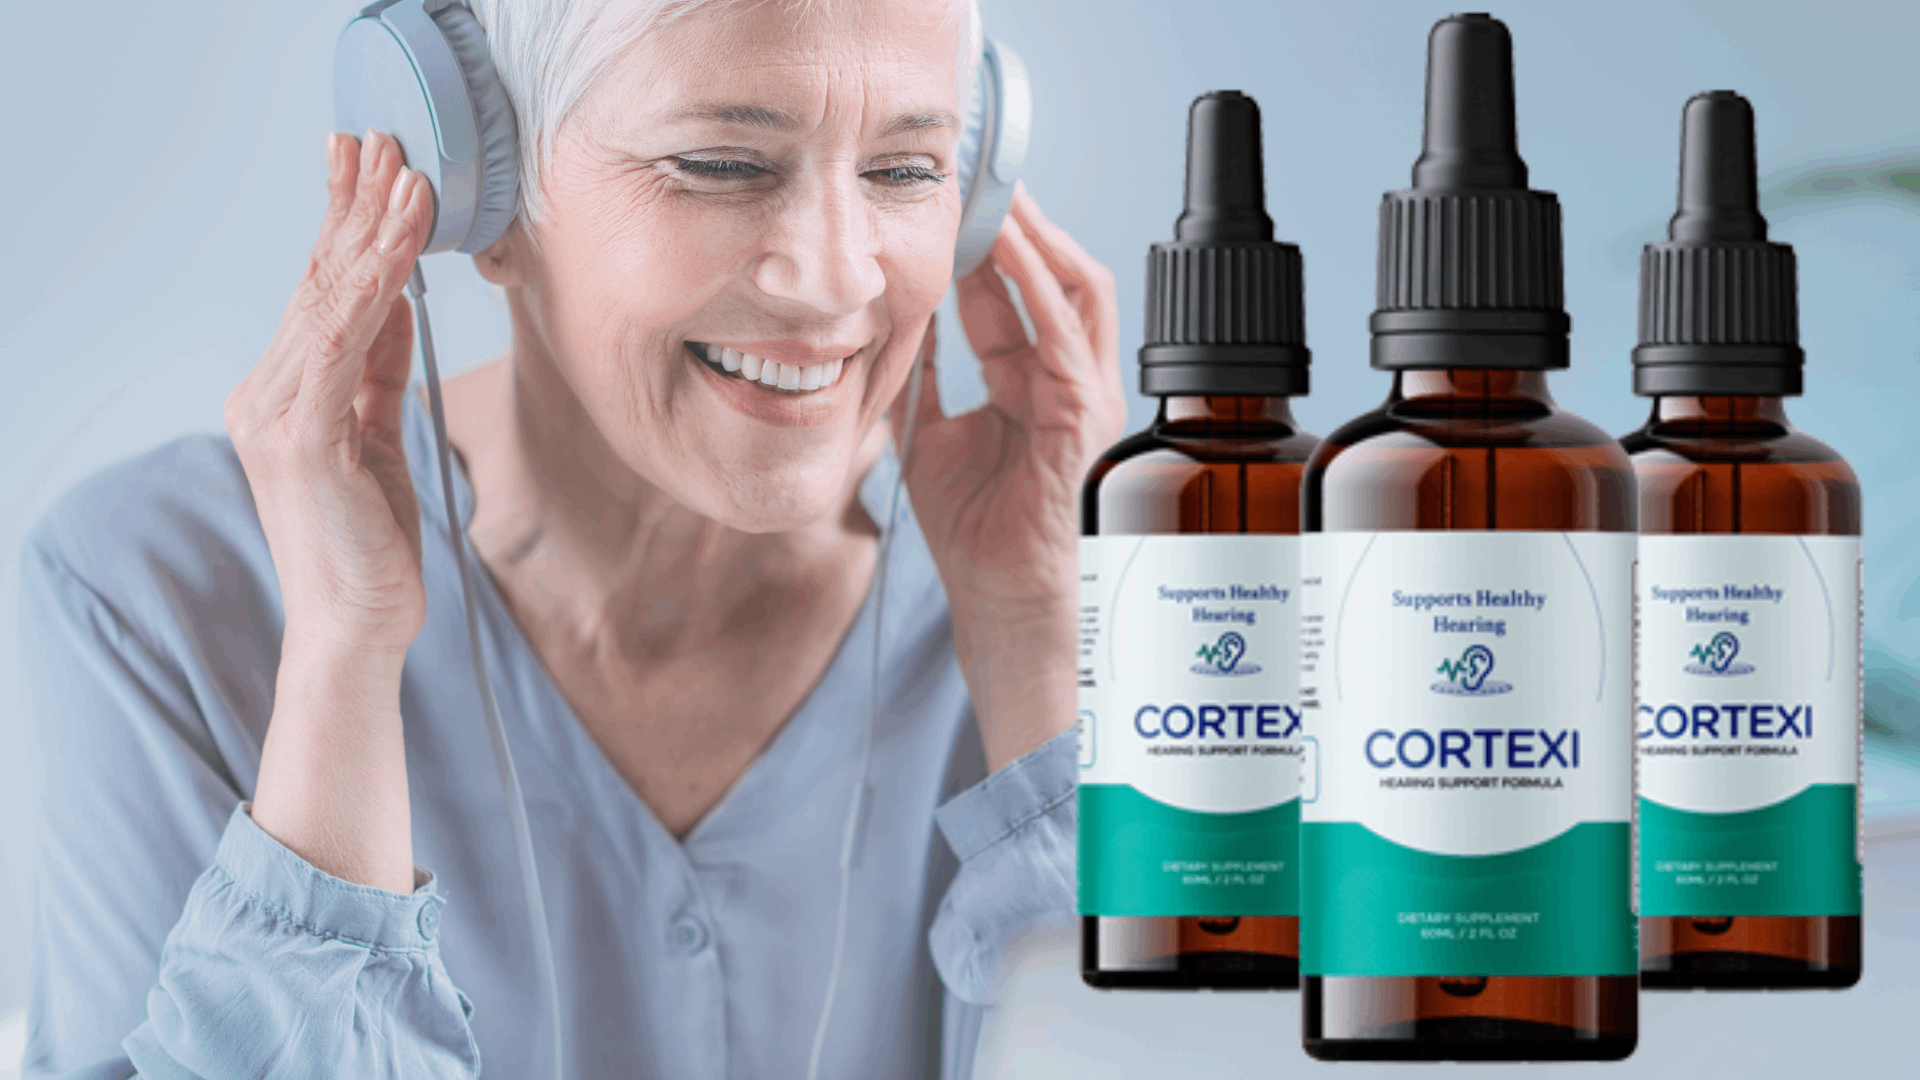 Cortexi-supplement-bottle-3